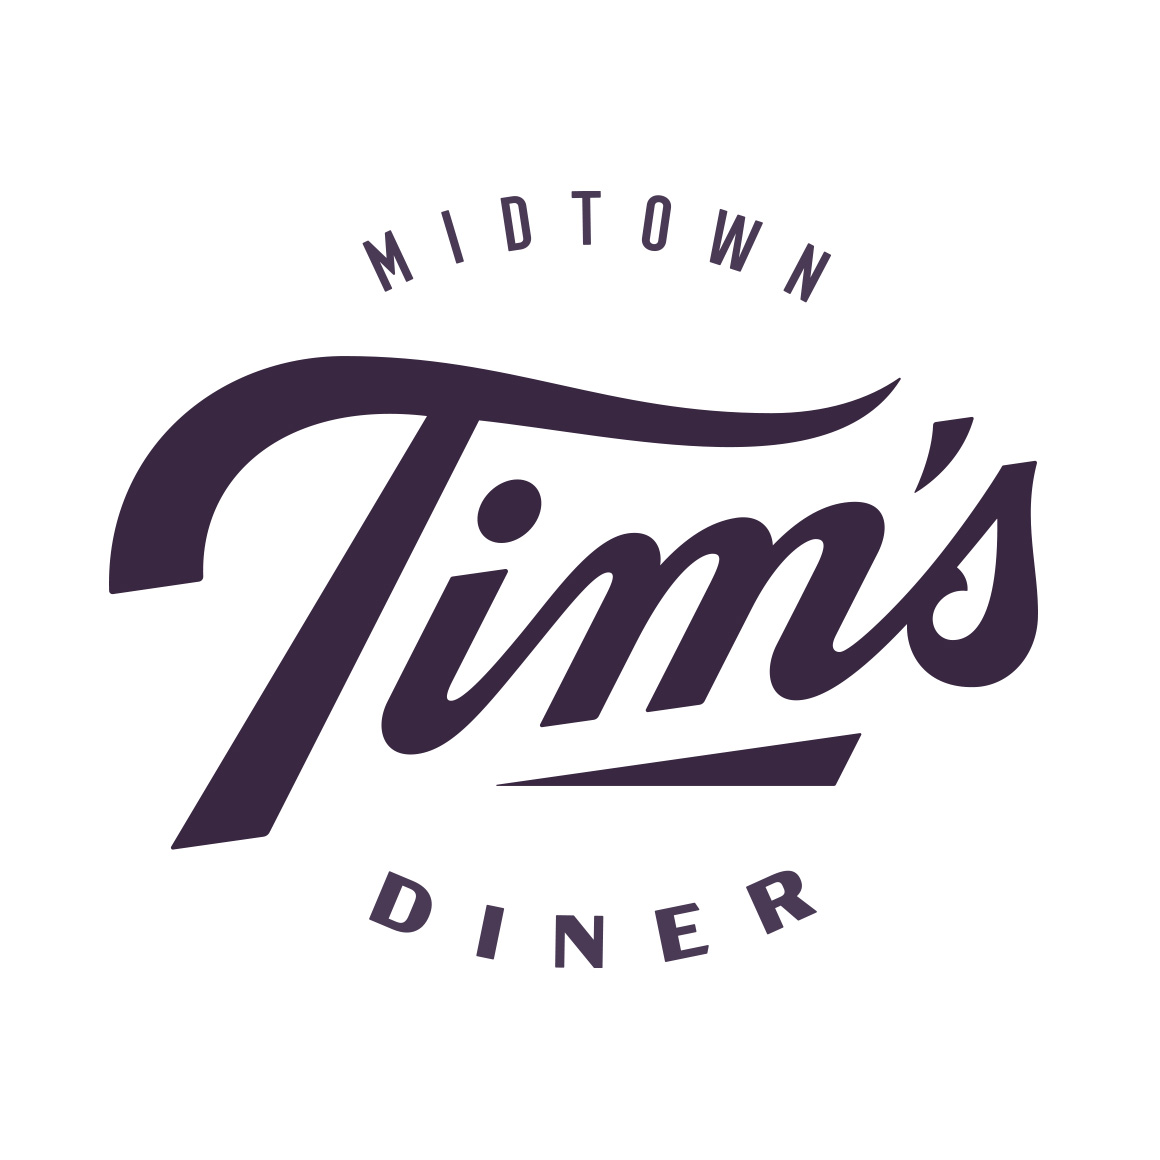 Tim's Midtown Diner logo design by logo designer Joshua Berman Design for your inspiration and for the worlds largest logo competition